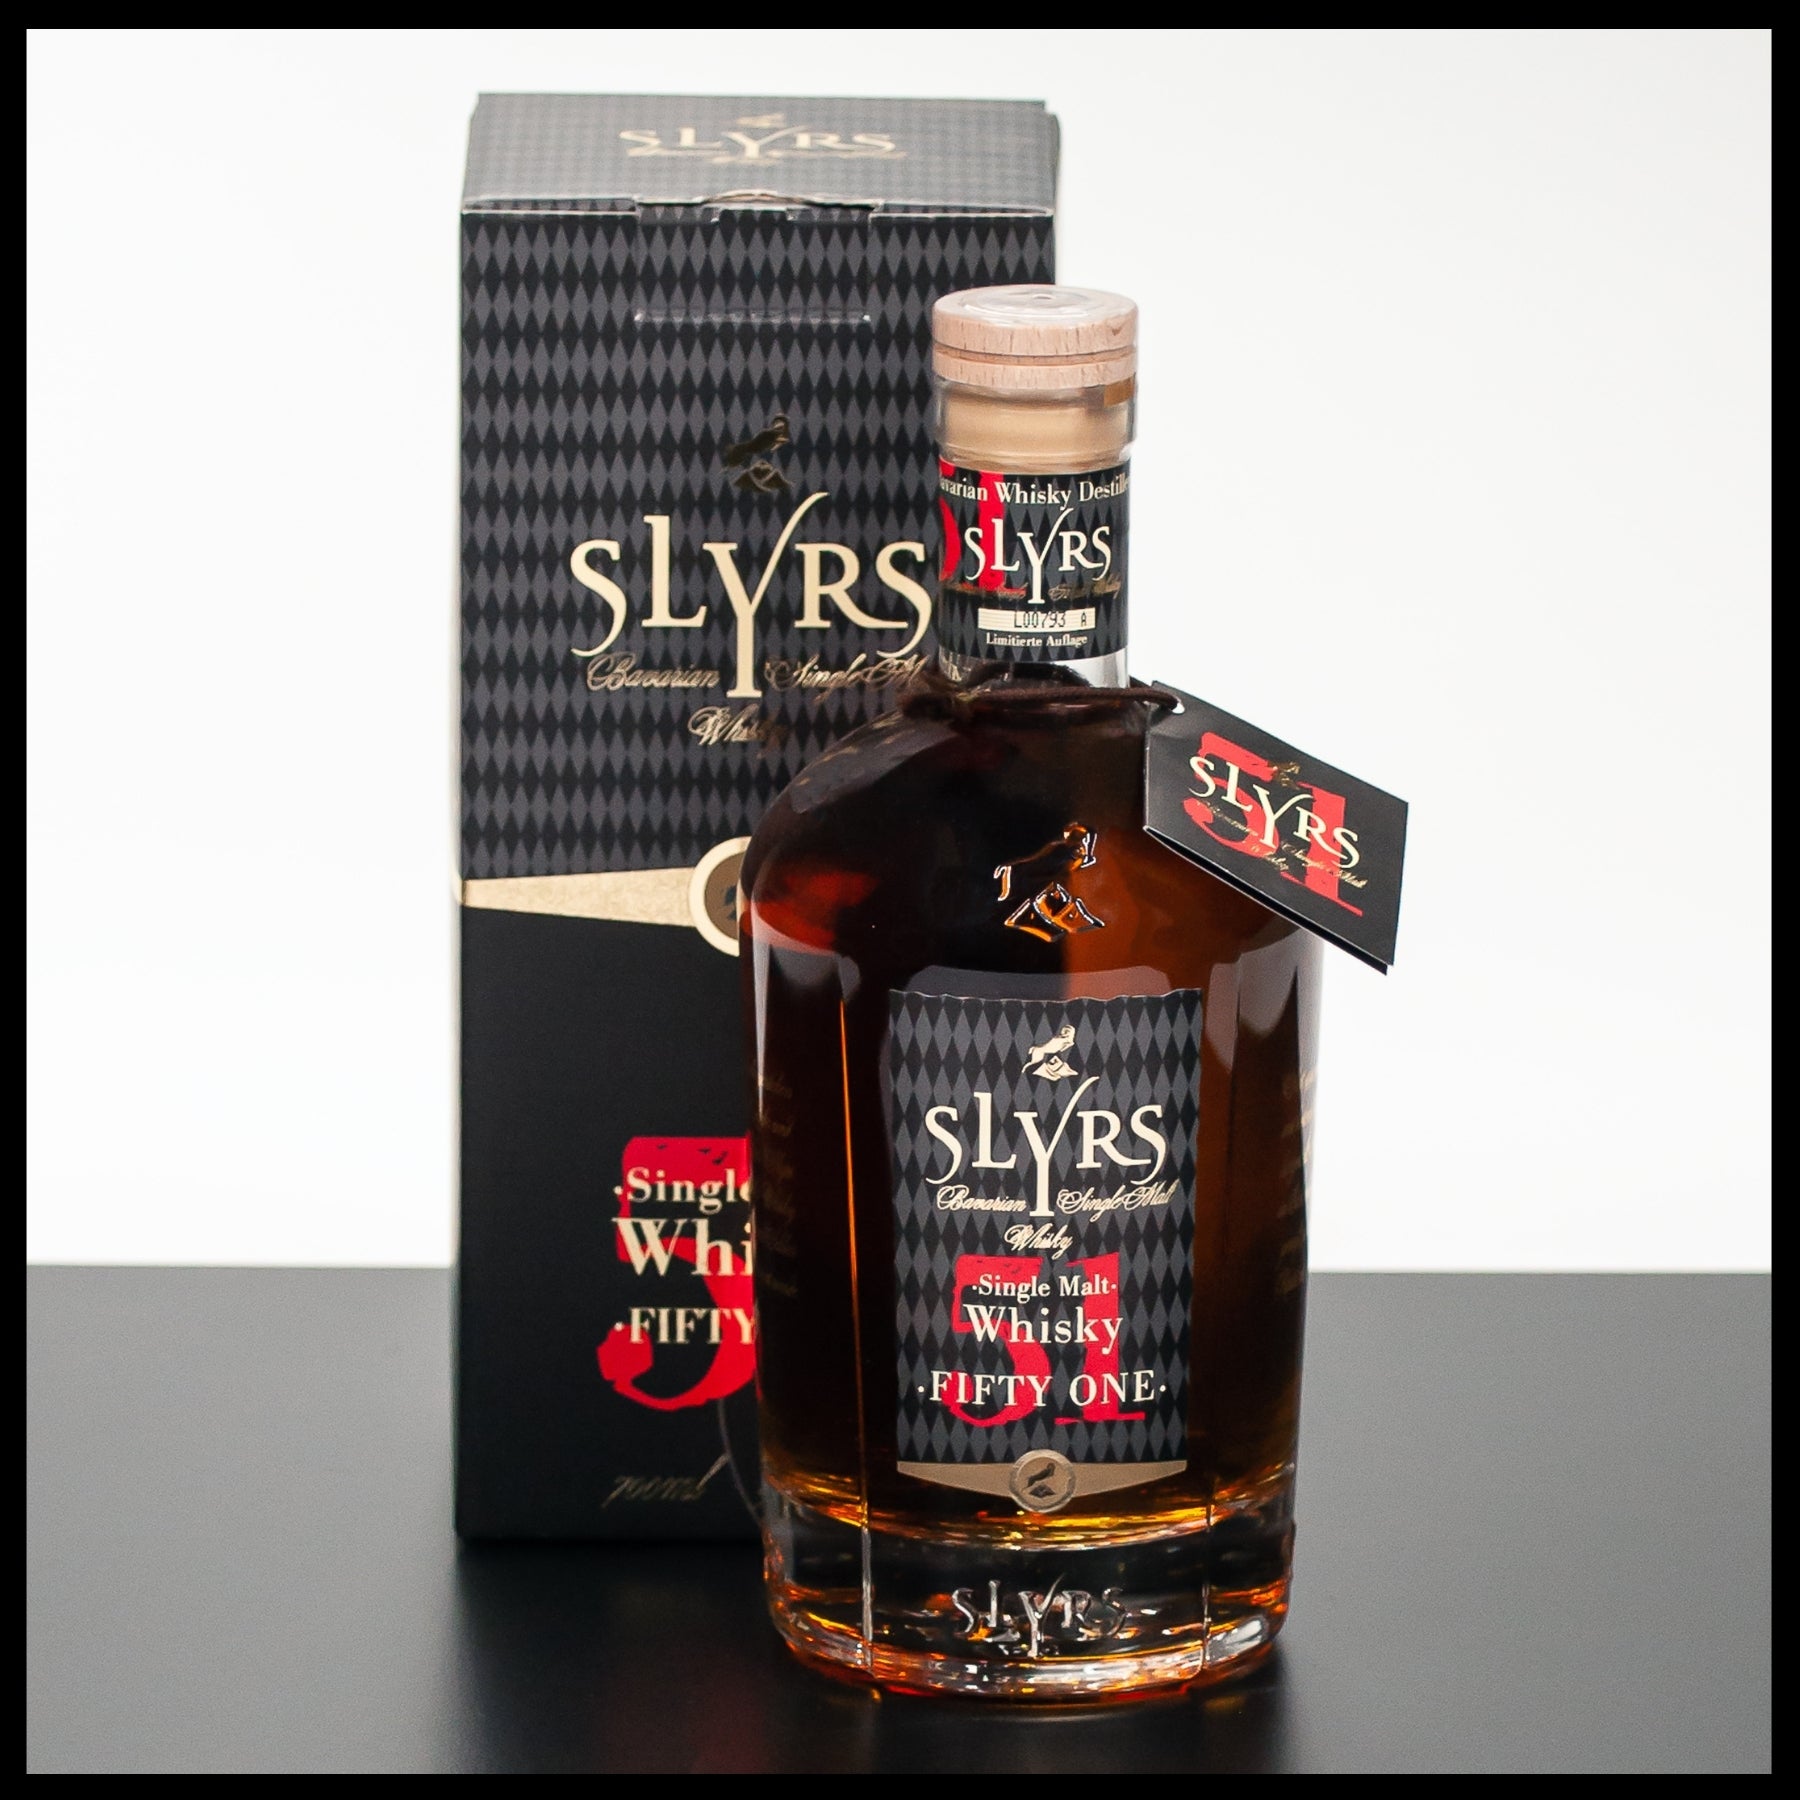 Slyrs Fifty One Single Whisky 51% - 0,7L Malt